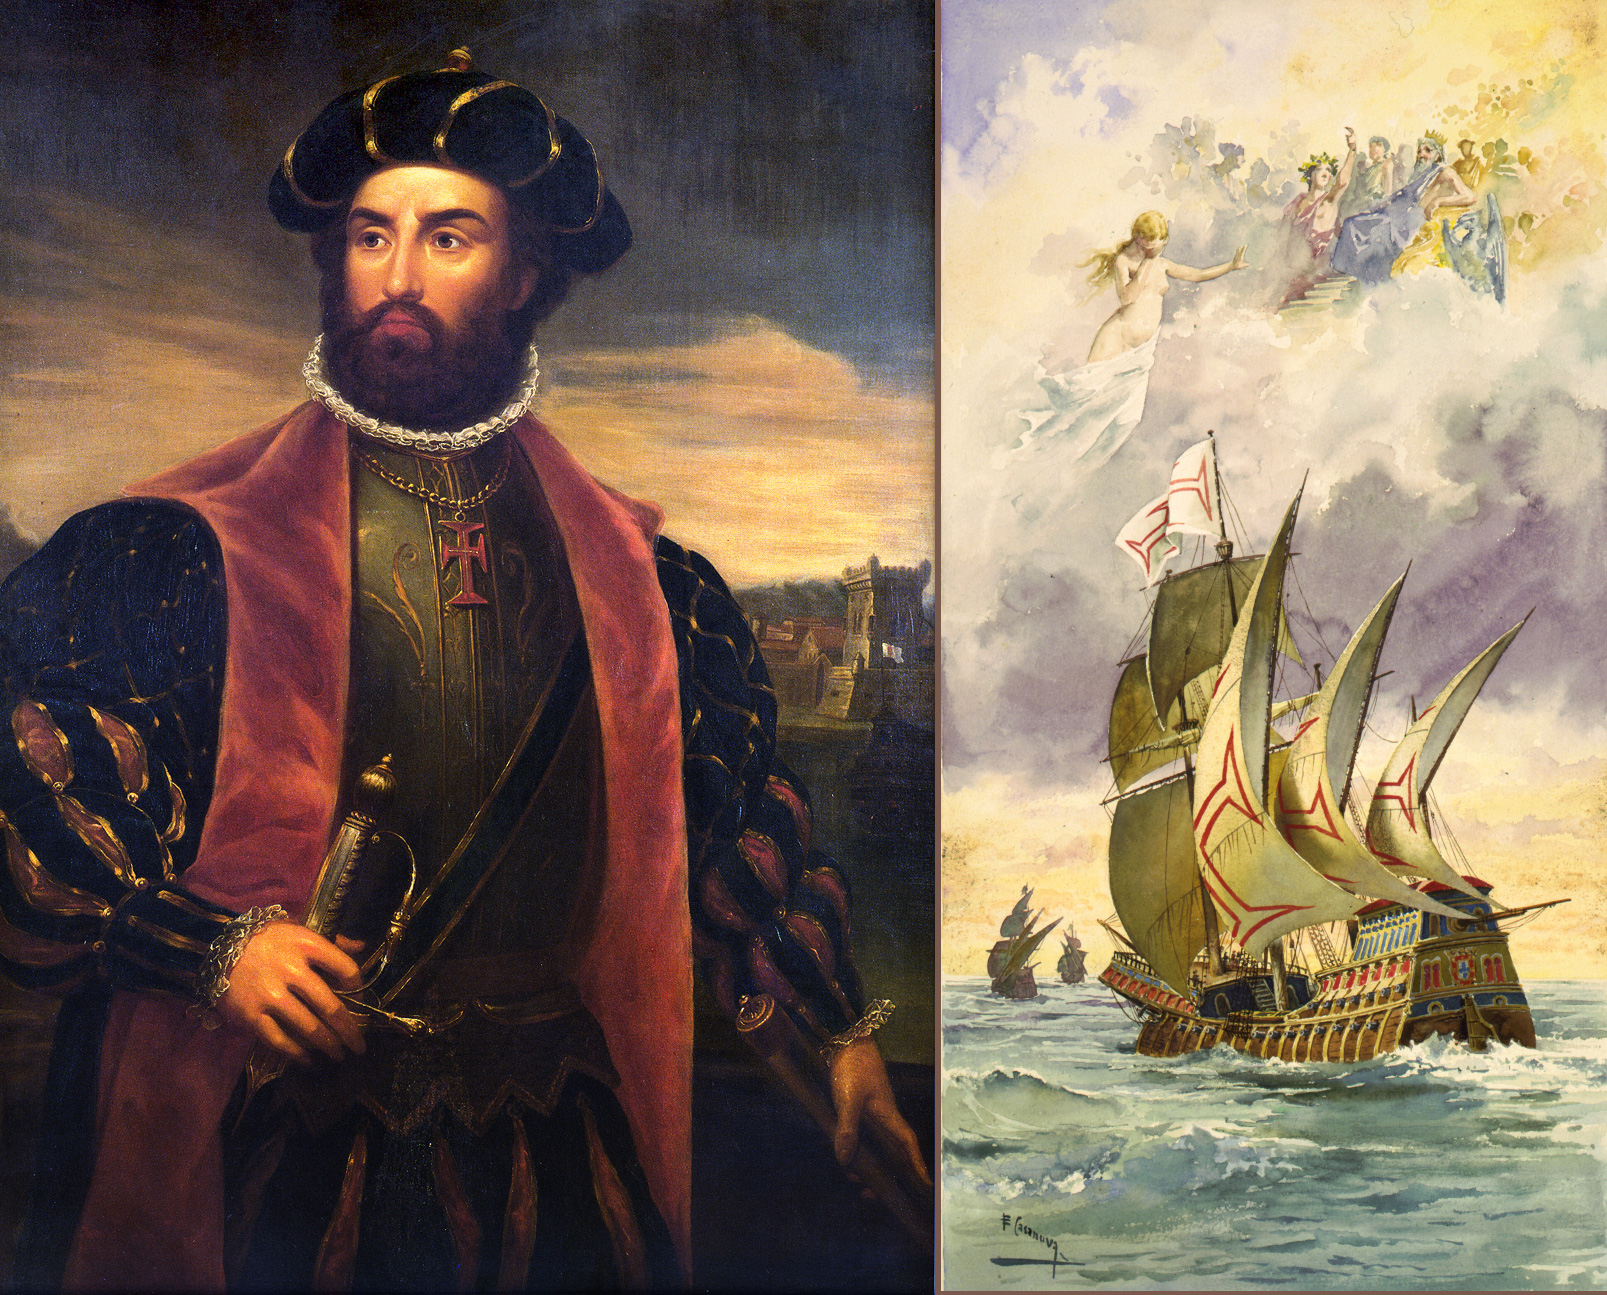 Vasco da Gama decides to depart Calicut and return to Portugal